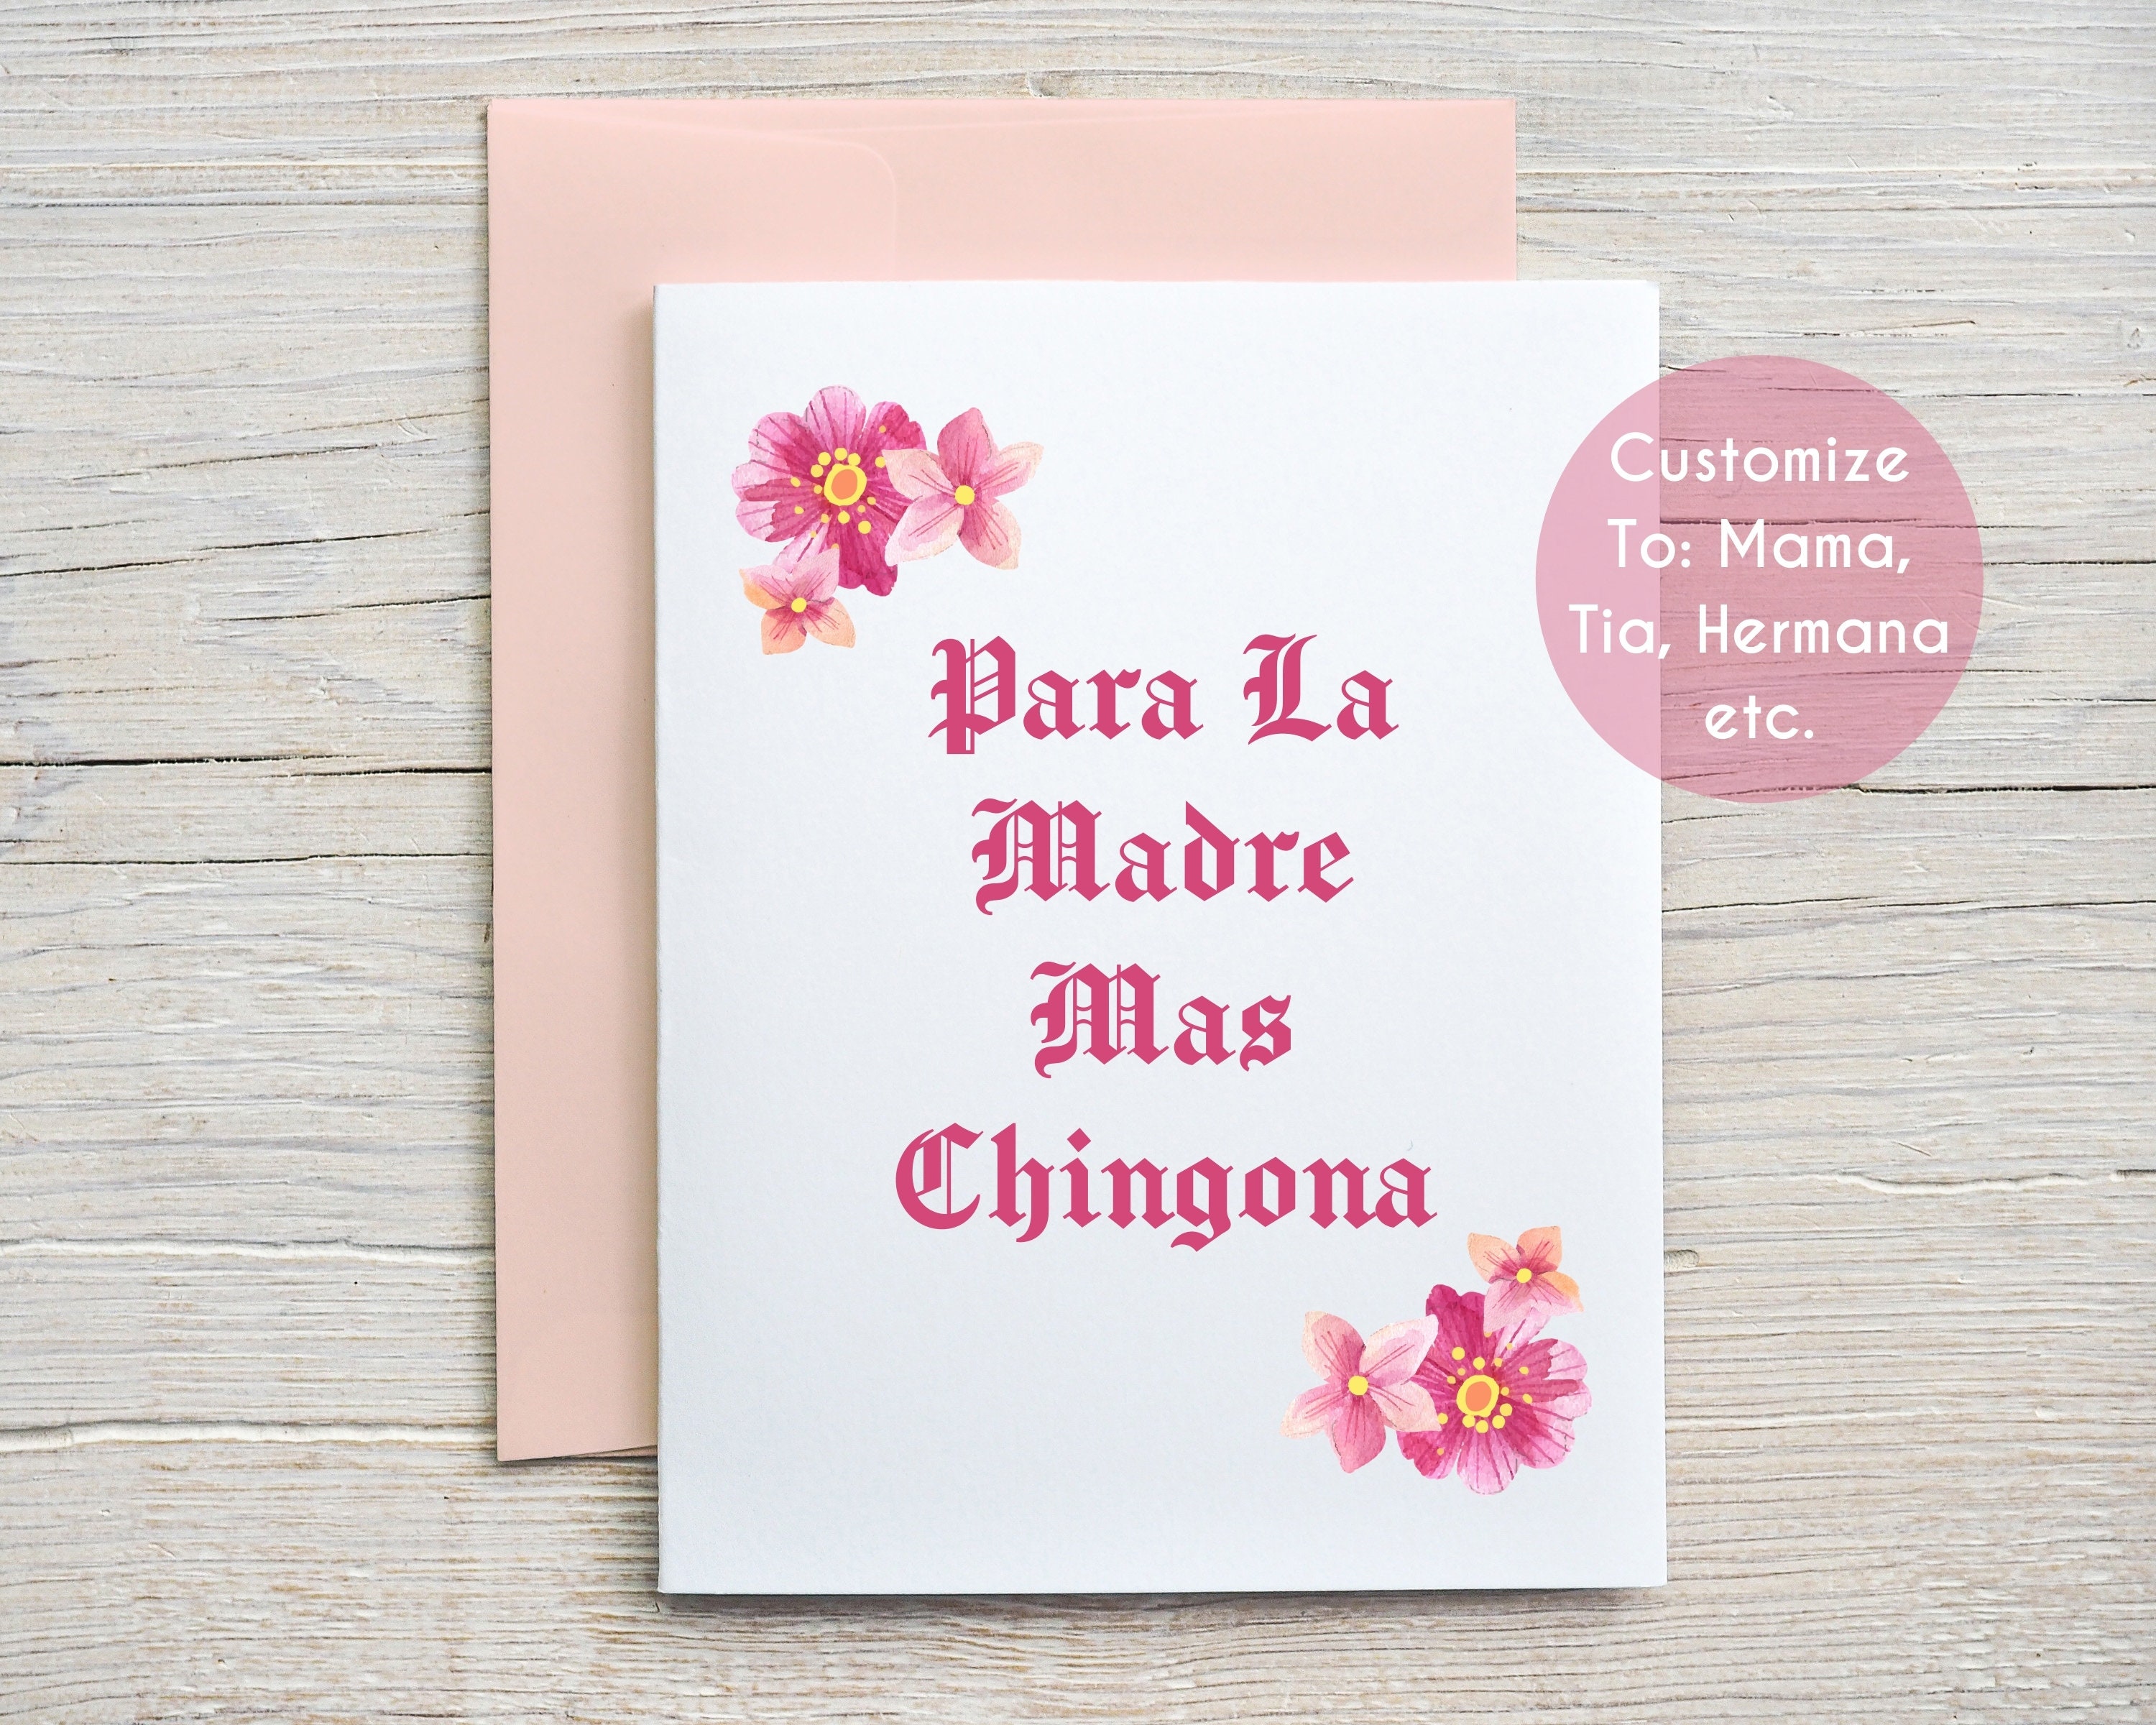 Womens La Mama Mas Chingona Cute Heart Spanish Mom Womens Gifts Hoodie